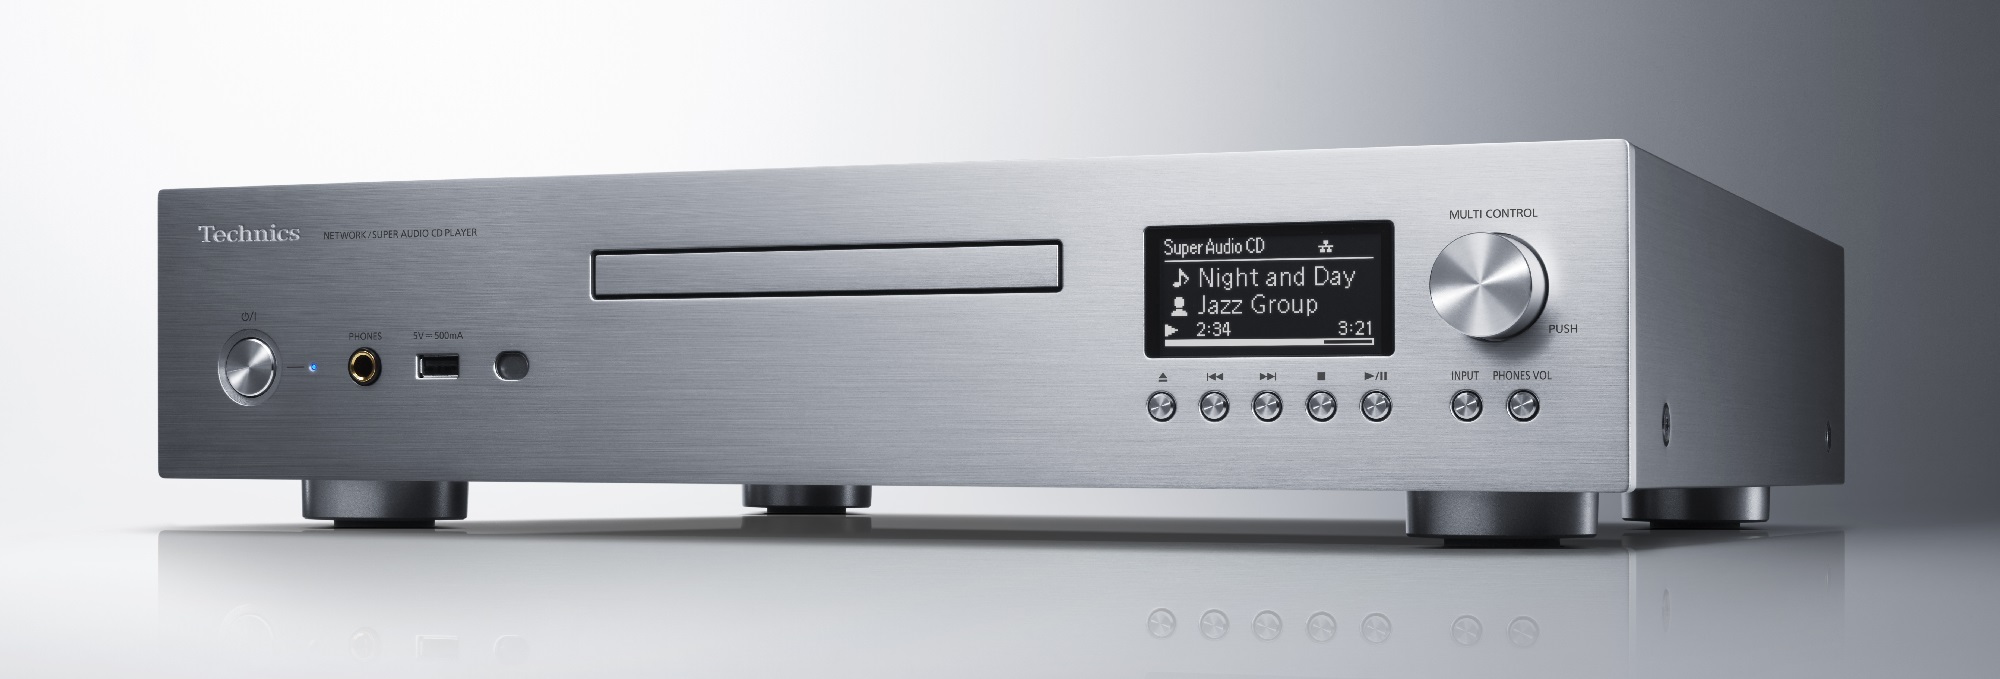 Technics SL-G700 Grand Class Network/Super Audio CD Player